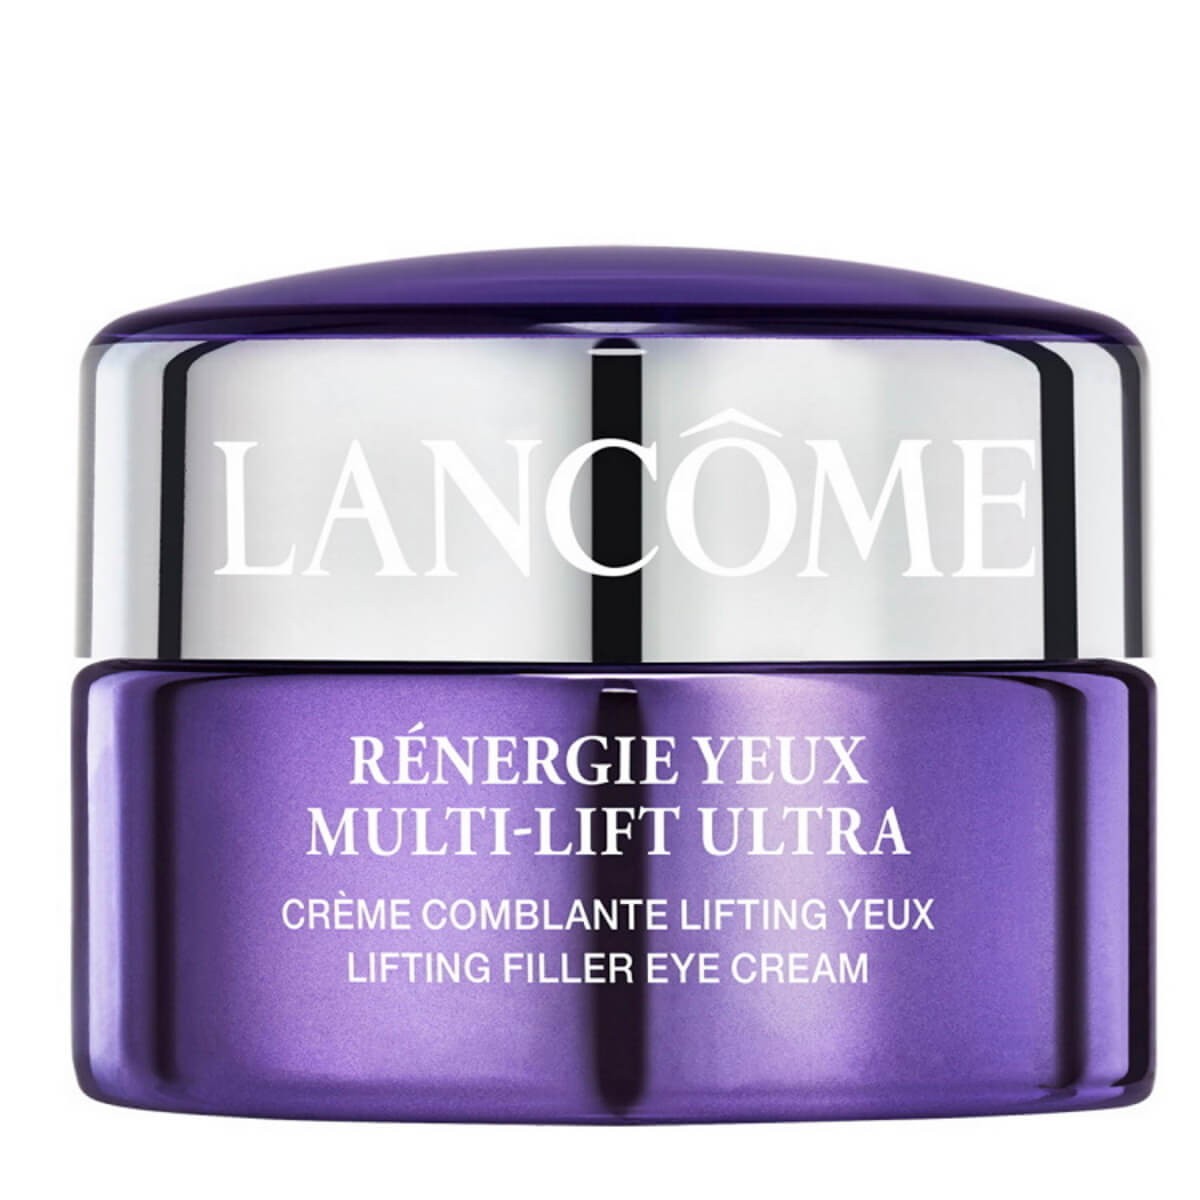 Lancôme - Rénergie Yeux Multi-Lift Lifting Filler Eye Cream - 